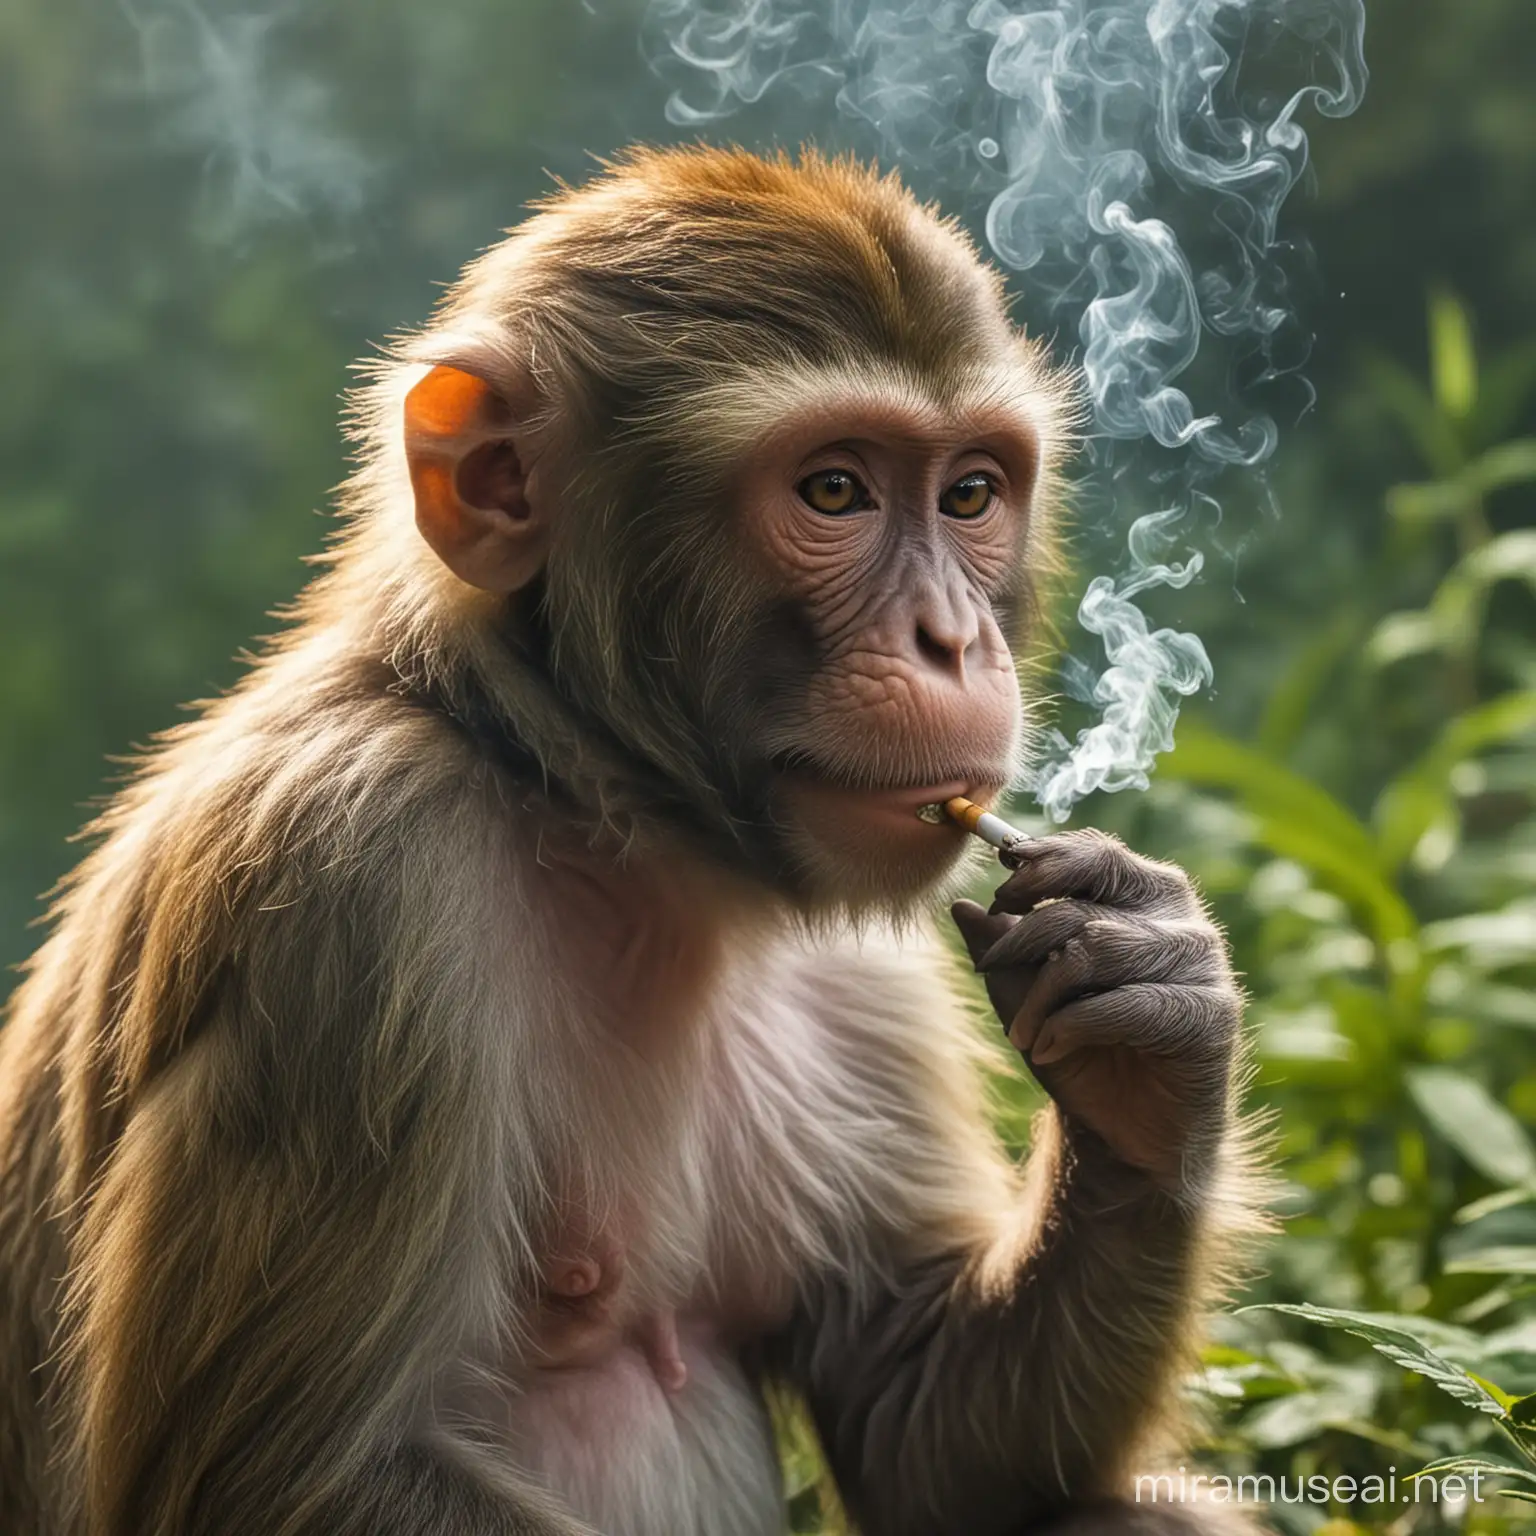 monkey smoking a weed